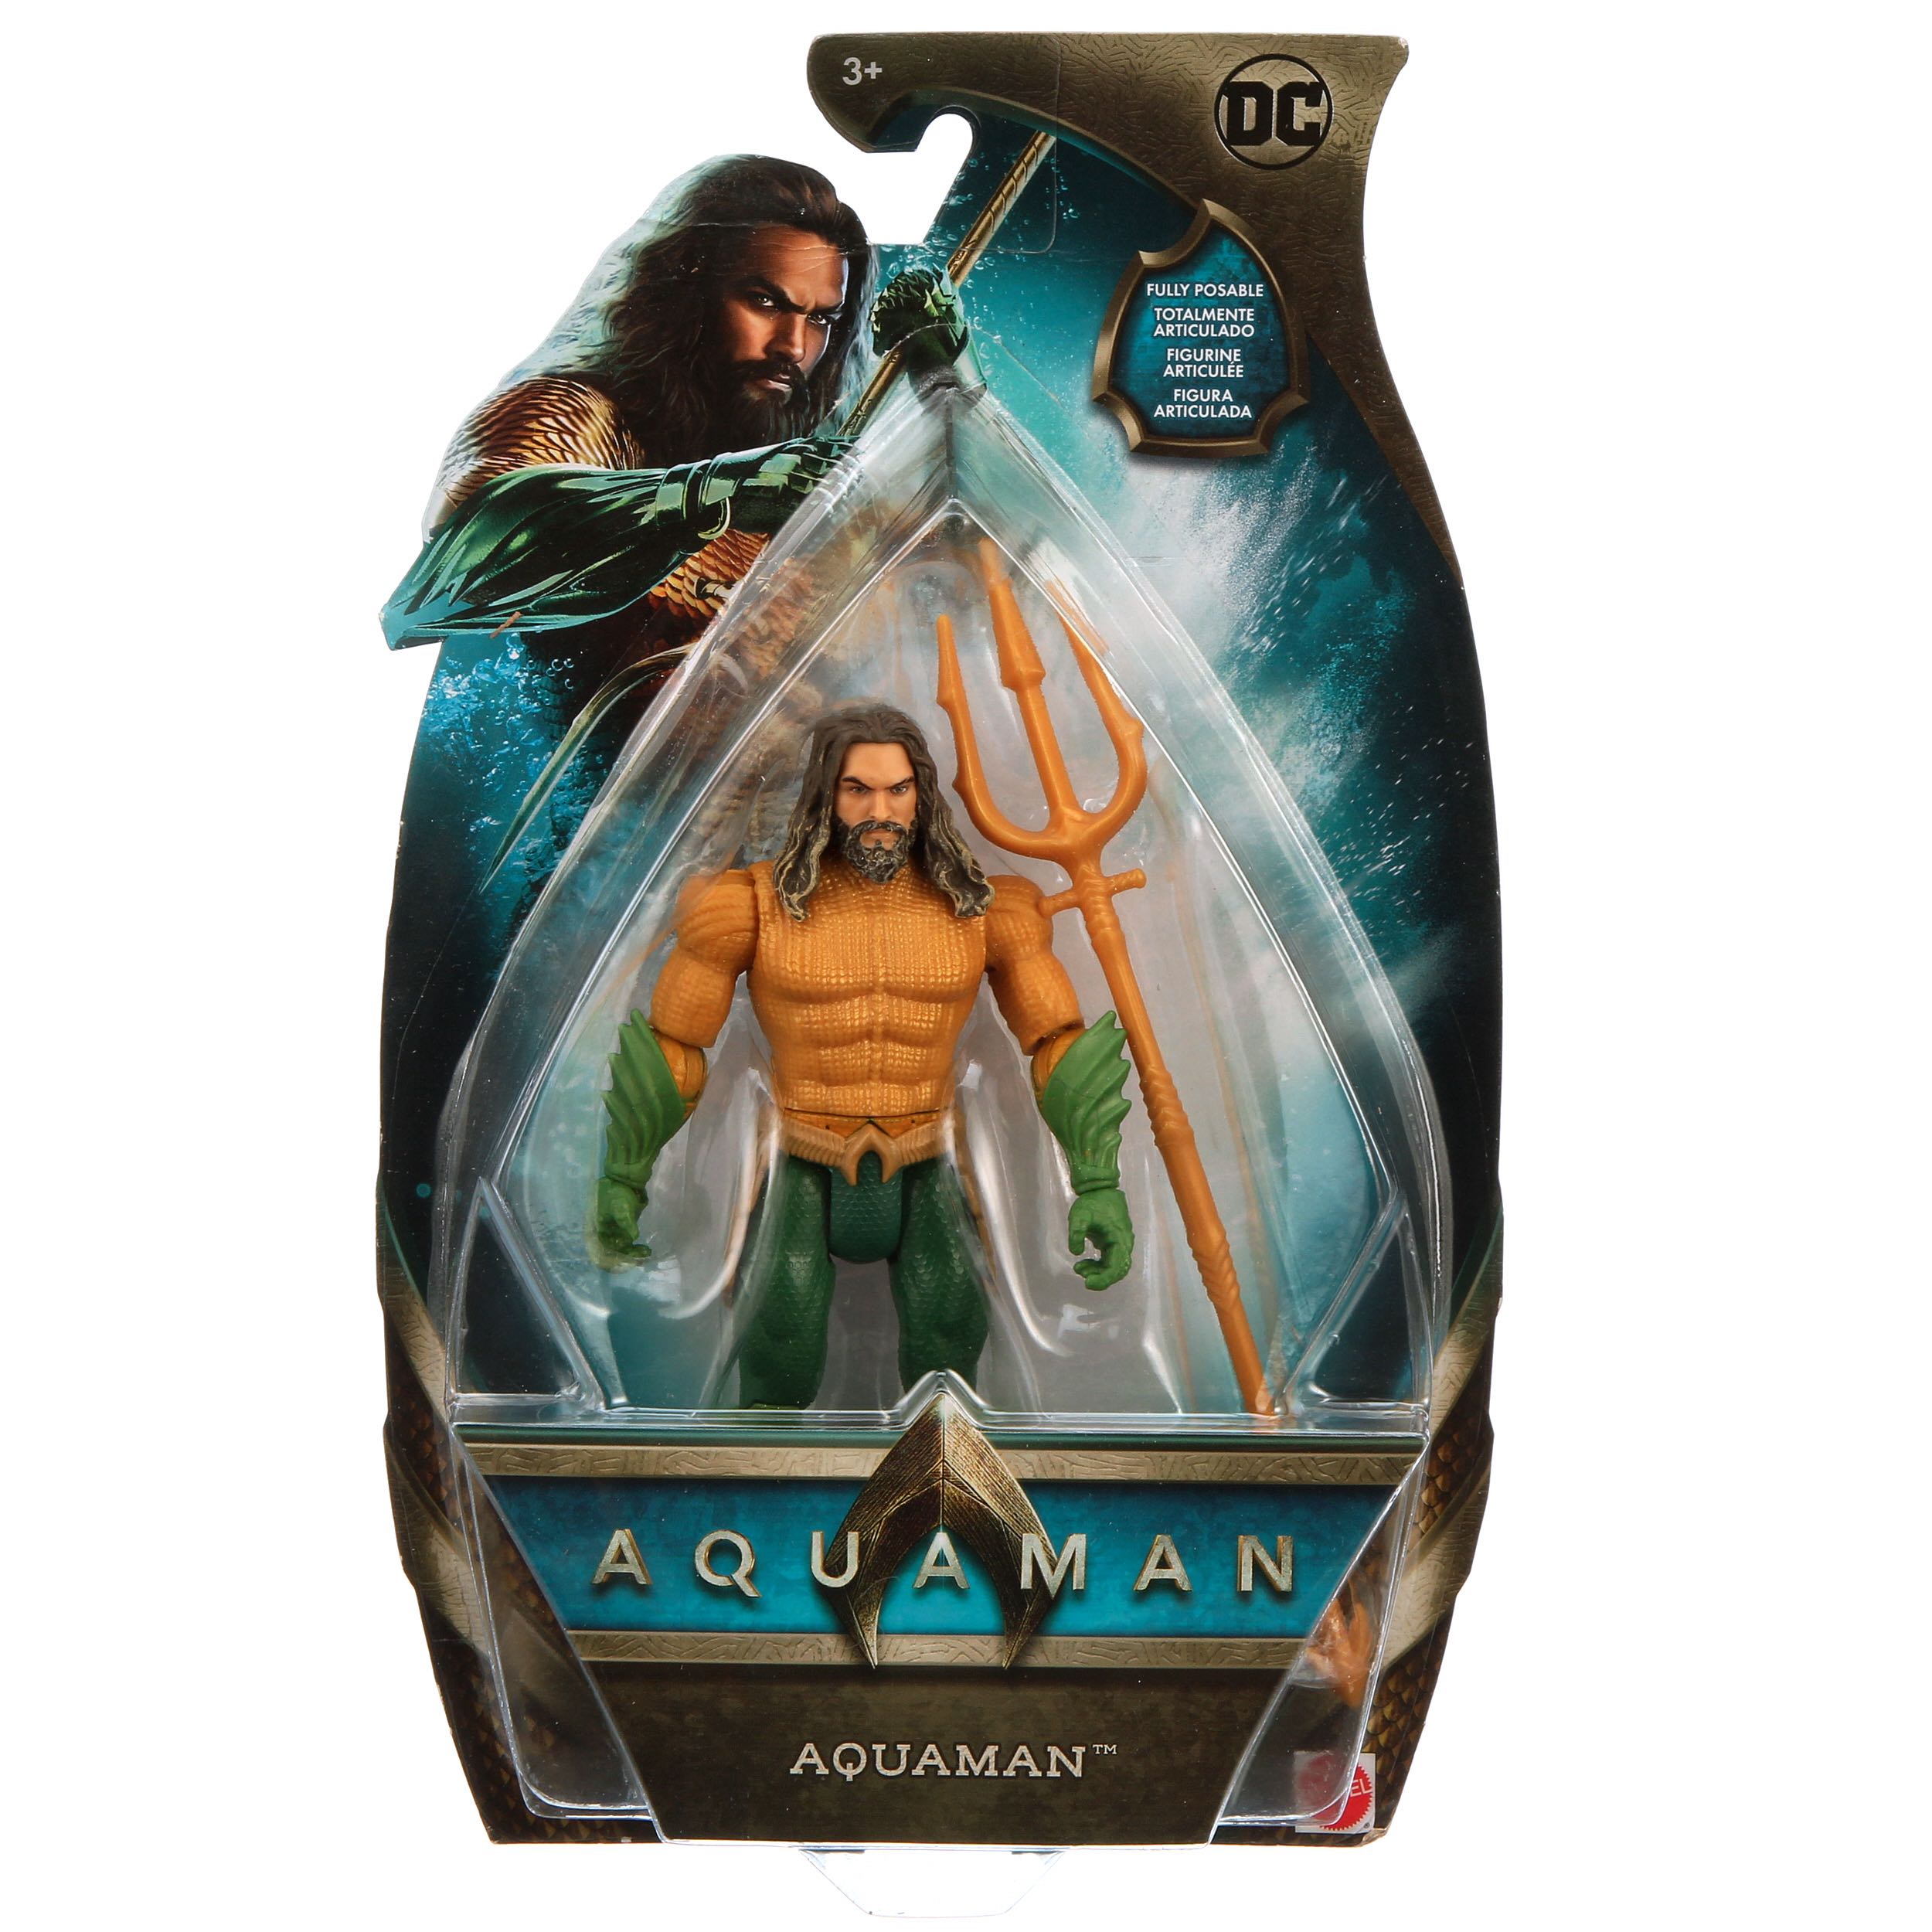 Aquaman - Mattel (Aquaman) action figure collectible - Main Image 1